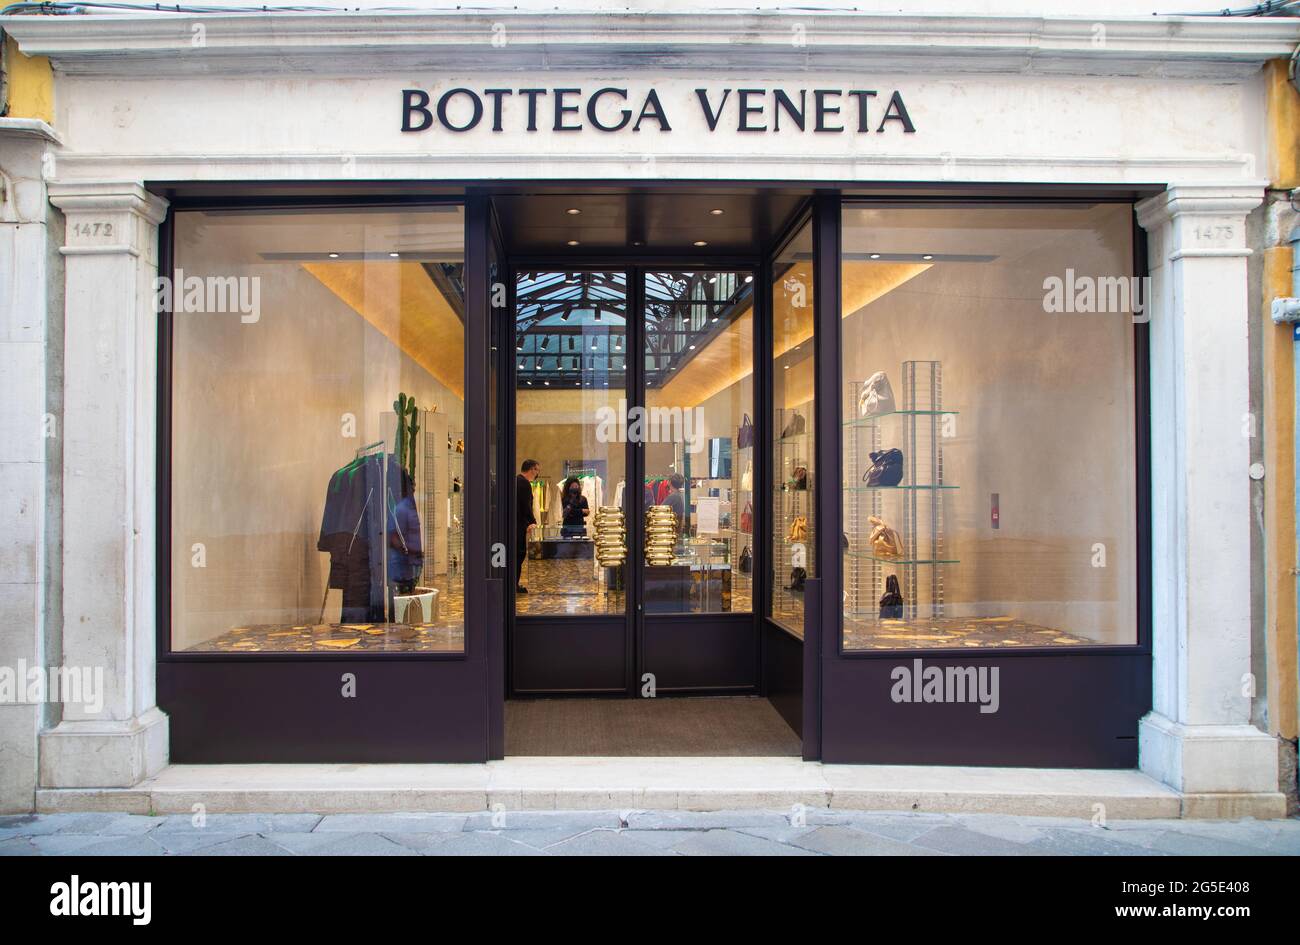 Bottega Veneta window in Venice, Italy Stock Photo - Alamy